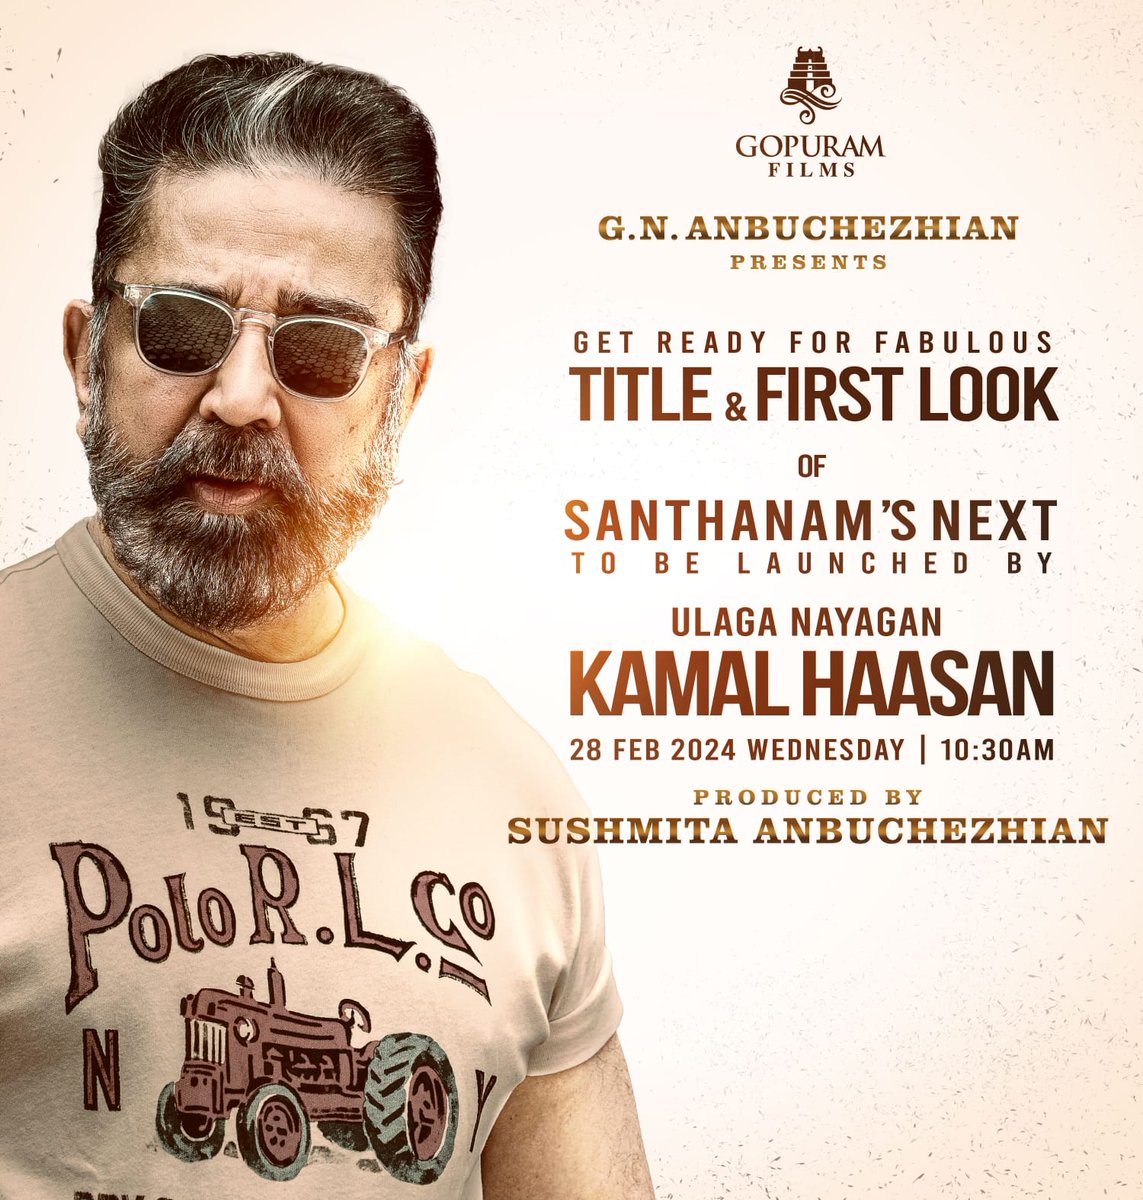 Title & First Look of Santhanam's Next To Be Launched By Ulaganayagan Kamal Haasan Tomorrow @ 10.30 AM 

@gopuramfilms #ProdNo5
Presented by #GNAnbuchezhian, Produced by #SushmitaAnbuchezhian